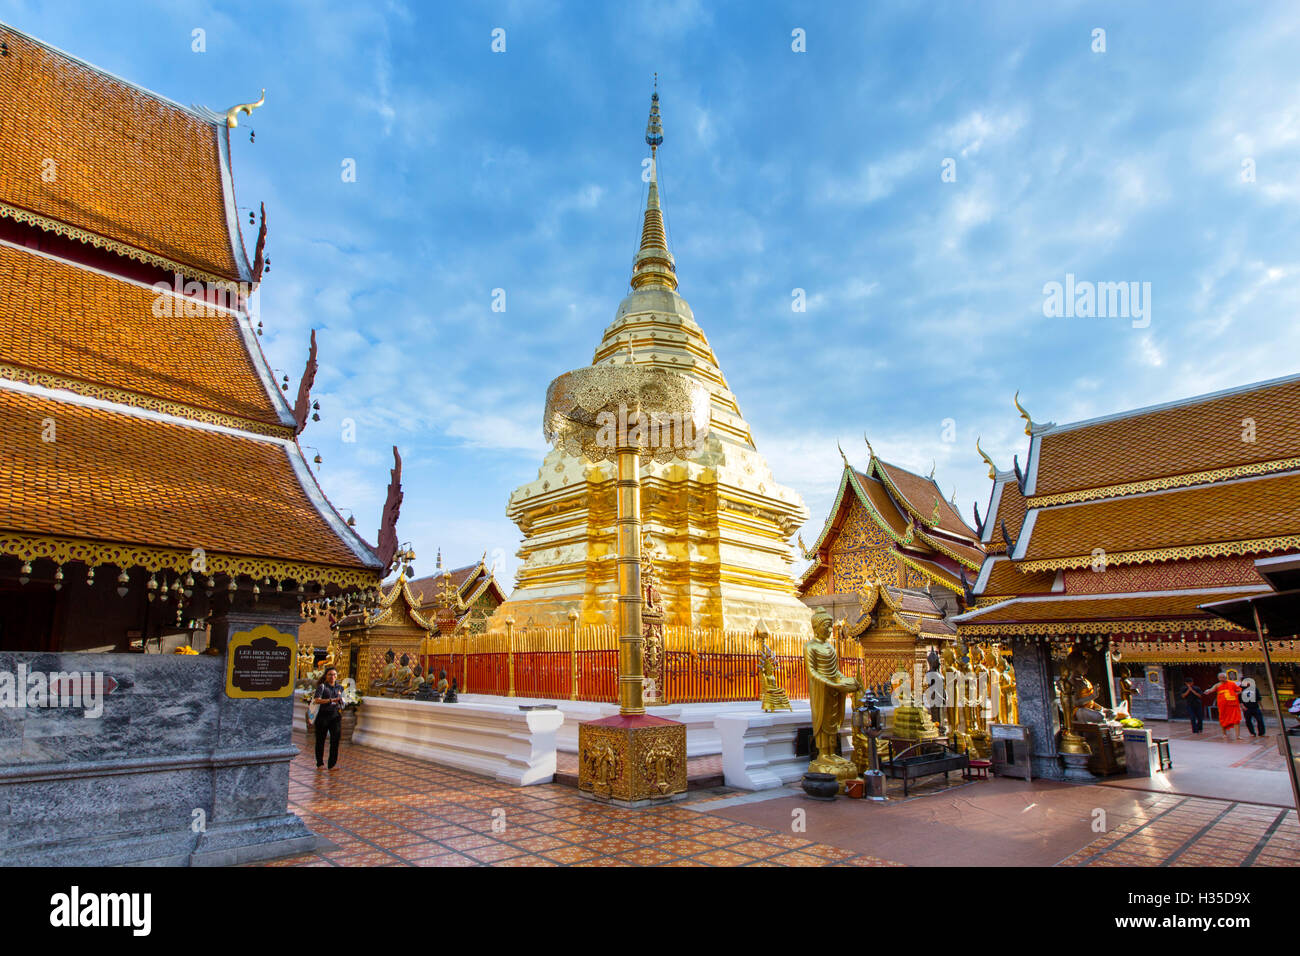 Doi Suthep temple, Chiang Mai, Thailand Stock Photo